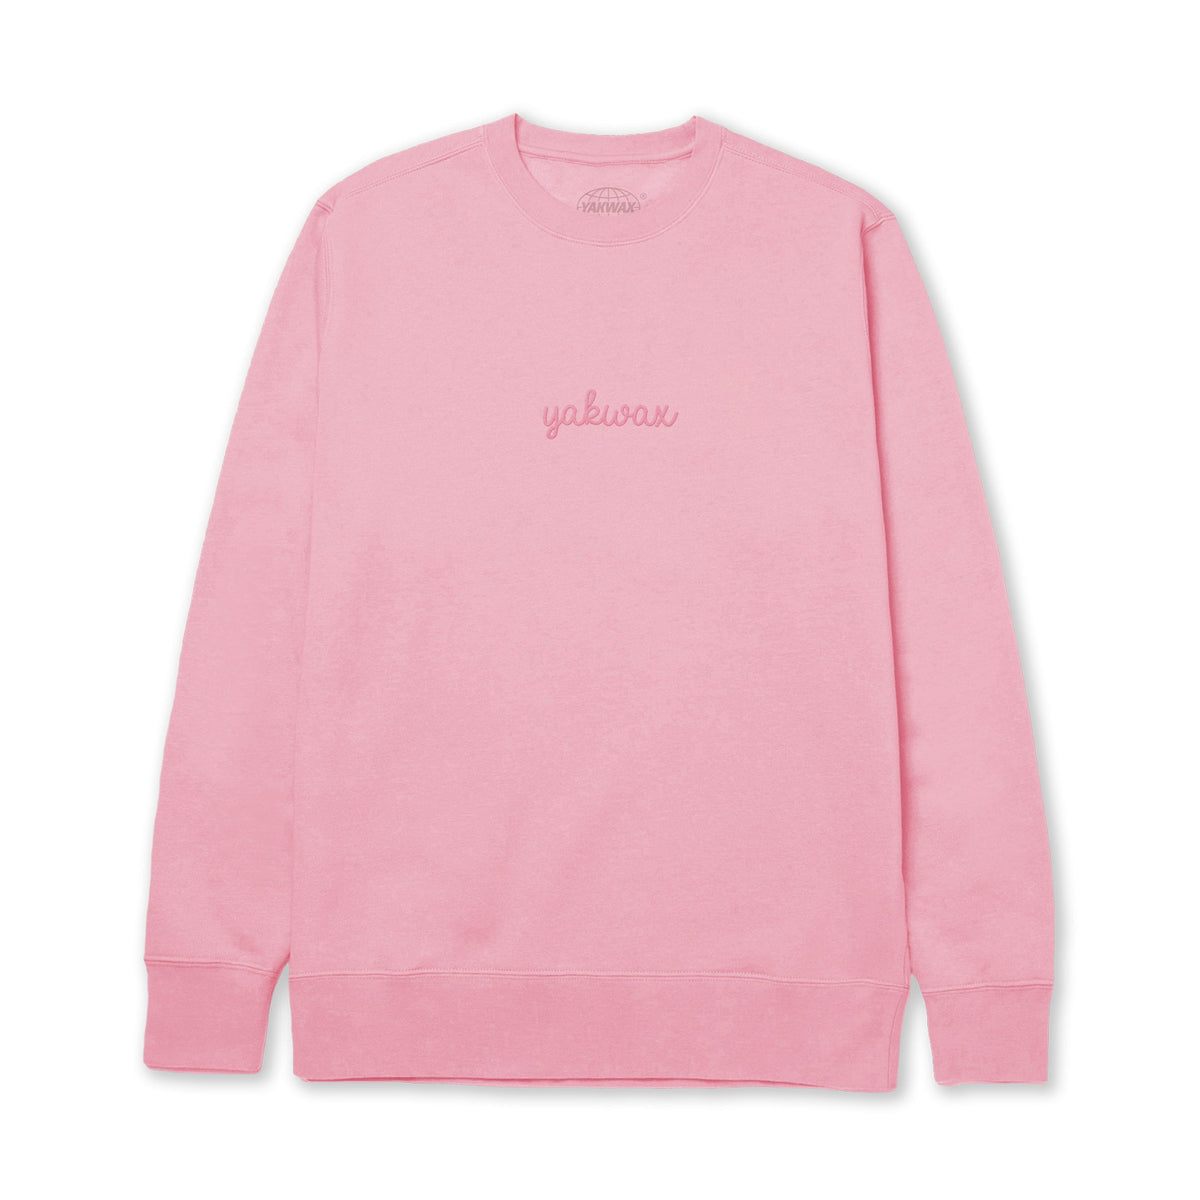 Yakwax Doodle Embroidered Crewneck Sweater - Pink/Pink - Mens Crew Neck Sweatshirt by Yakwax